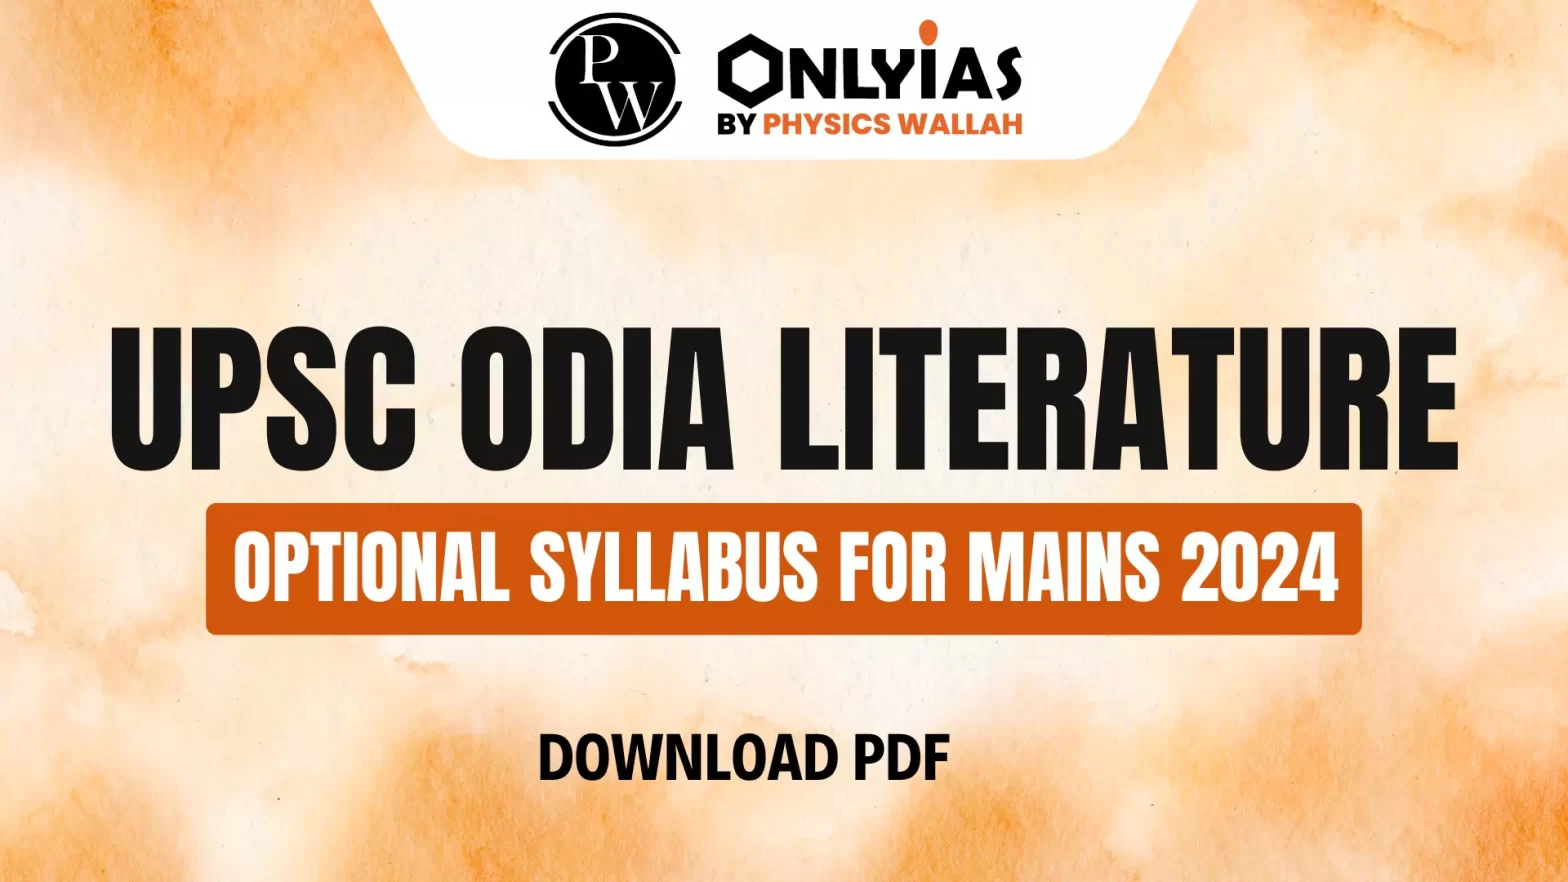 UPSC Odia Literature Optional Syllabus for Mains 2024, Download PDF